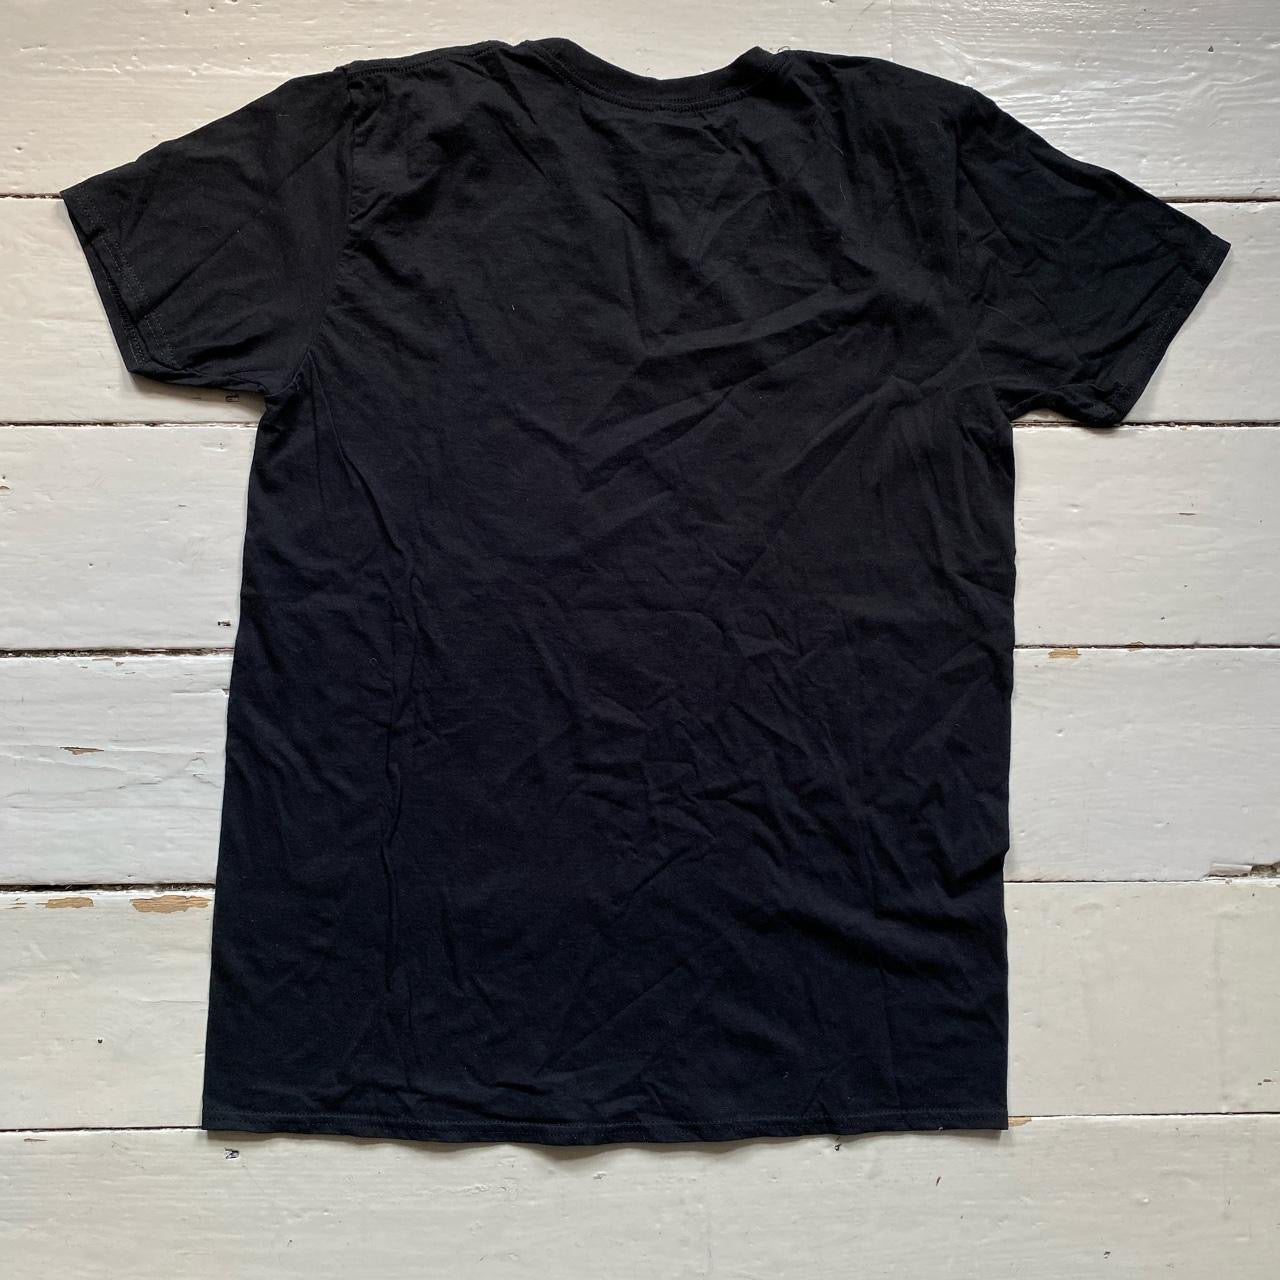 Nirvana Black T Shirt (Small)